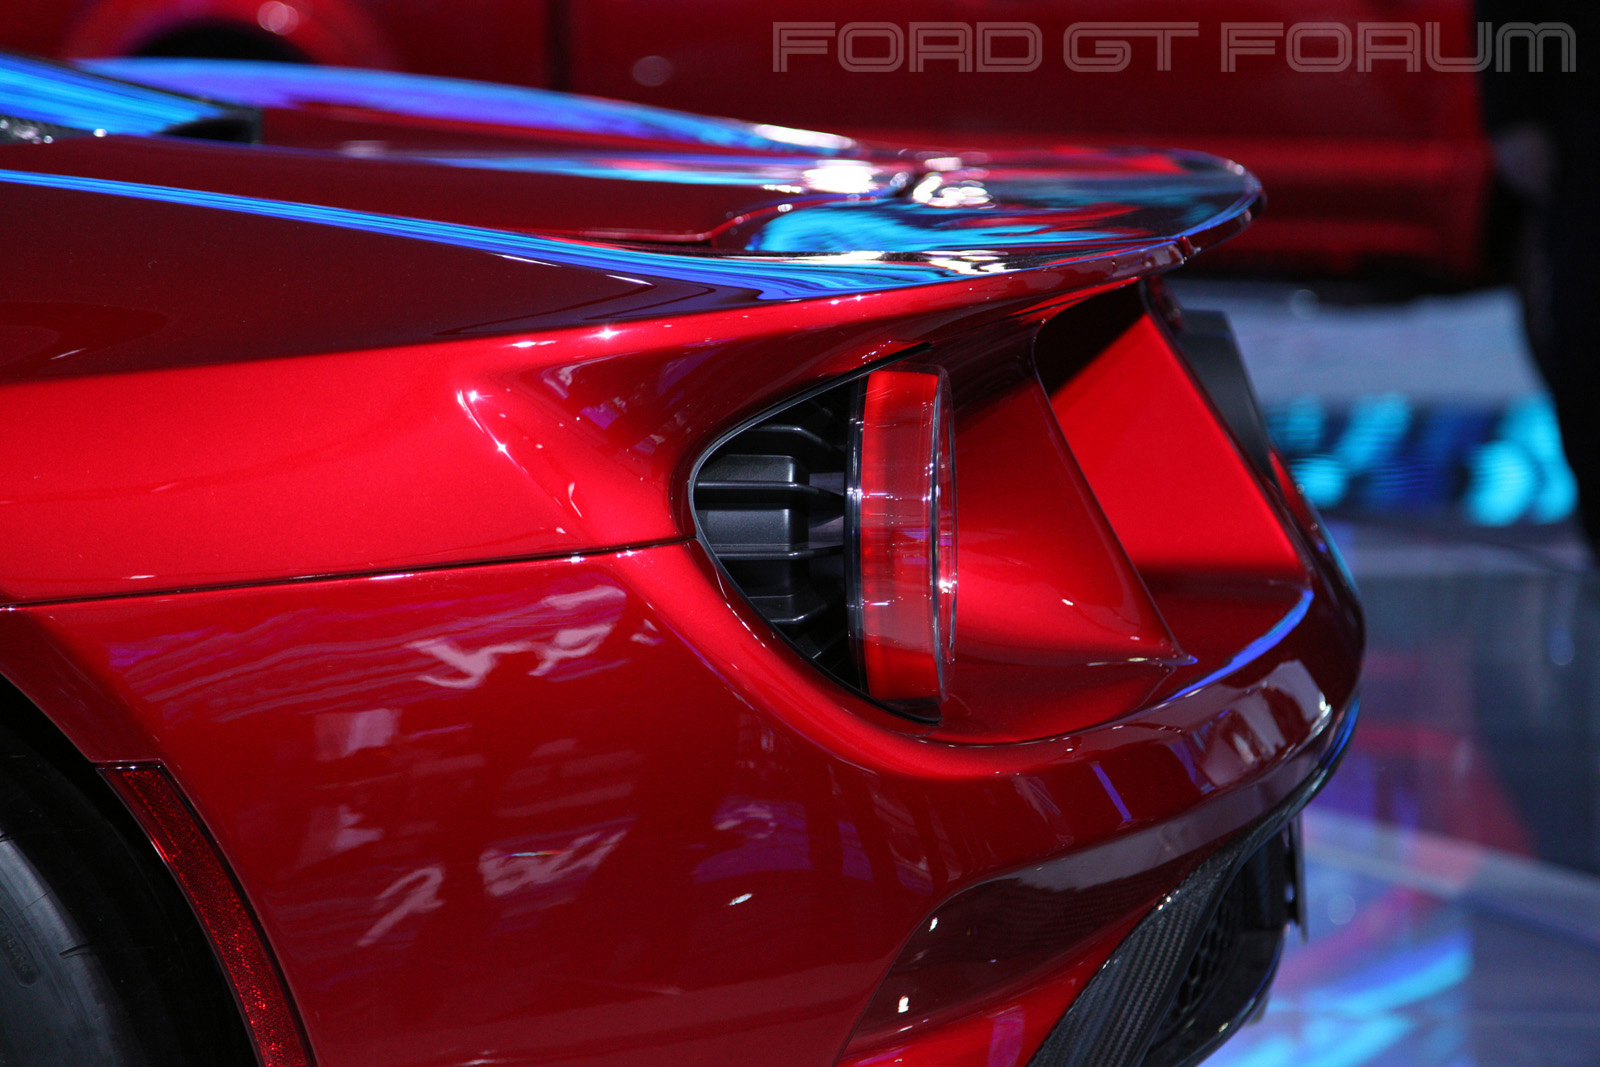 Ford-GT-Autoshow-3000-15.jpg